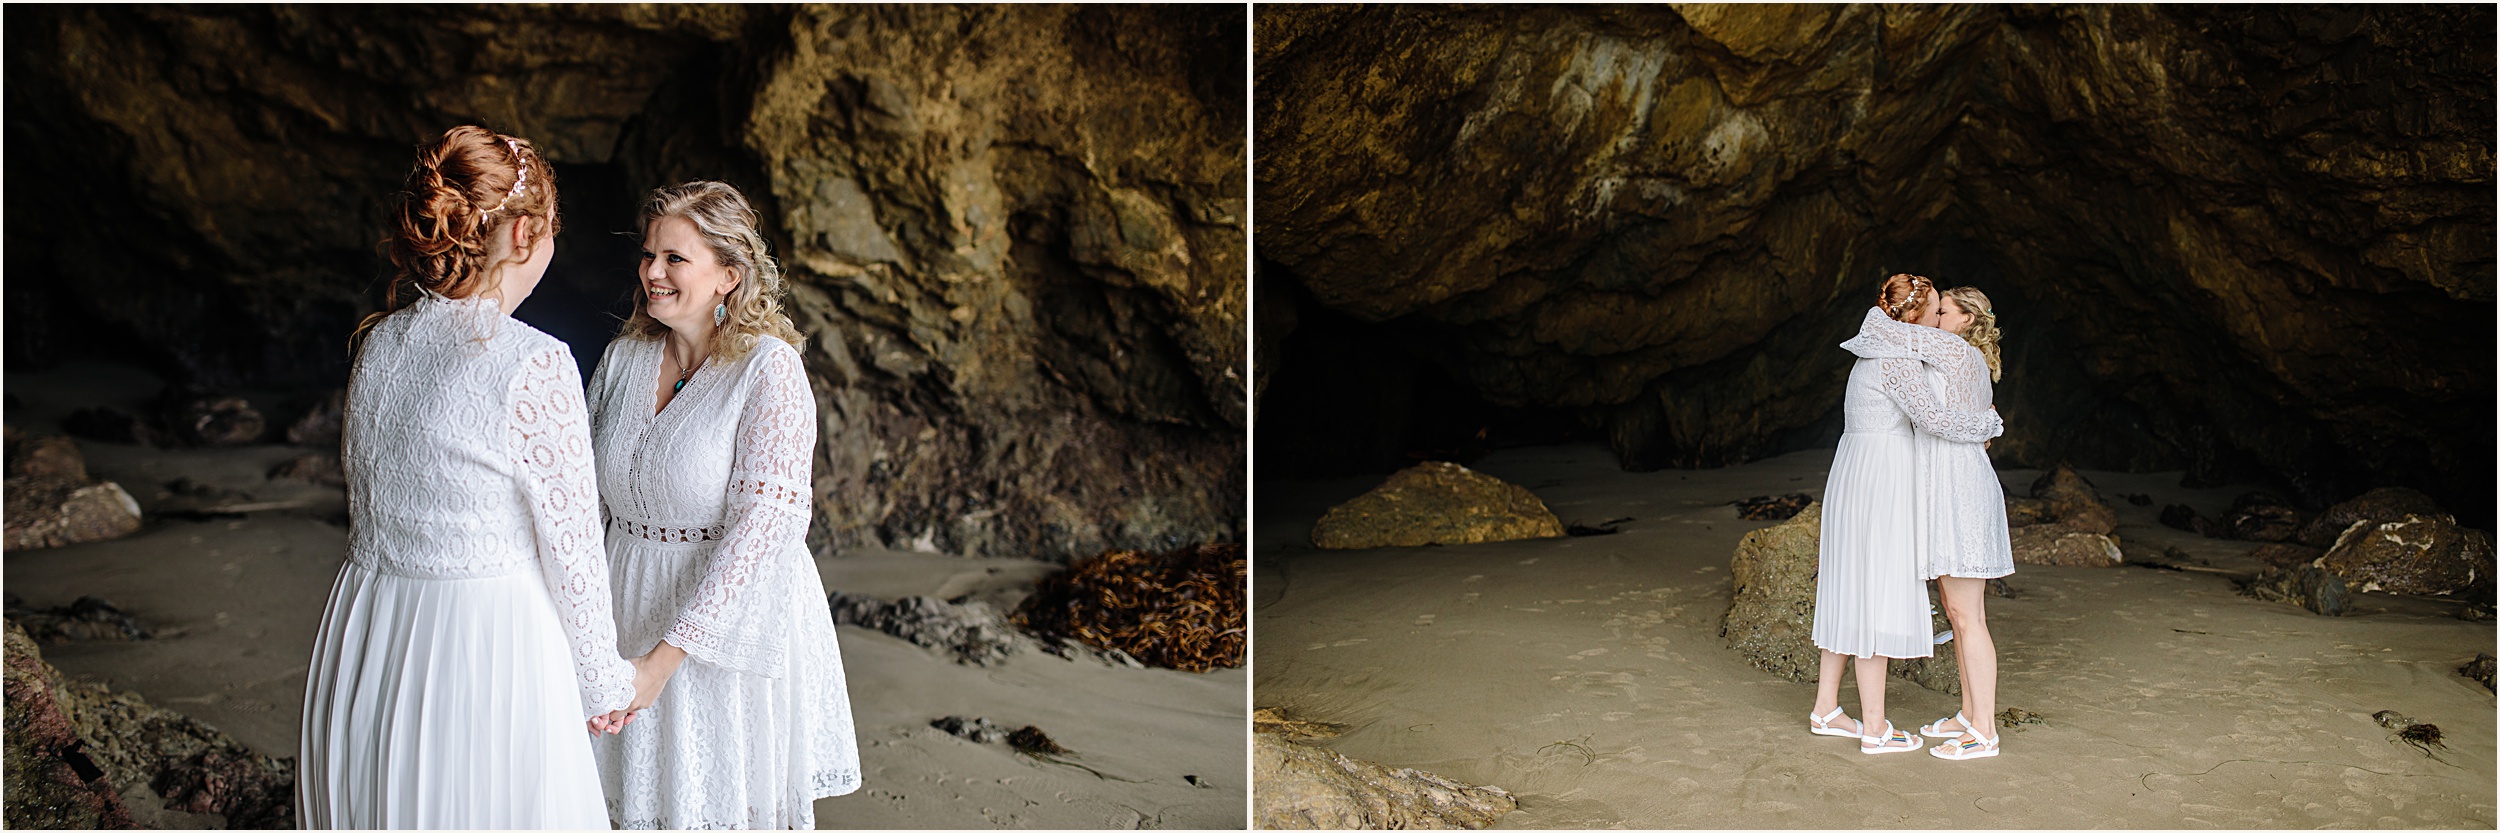 Steff-and-Brittni-Malibu-Elopement-Photographer-Malibu-elopement-locations-Malibu-elopement-packages_0001 El Matador Beach Elopement Adventure In Sea Caves